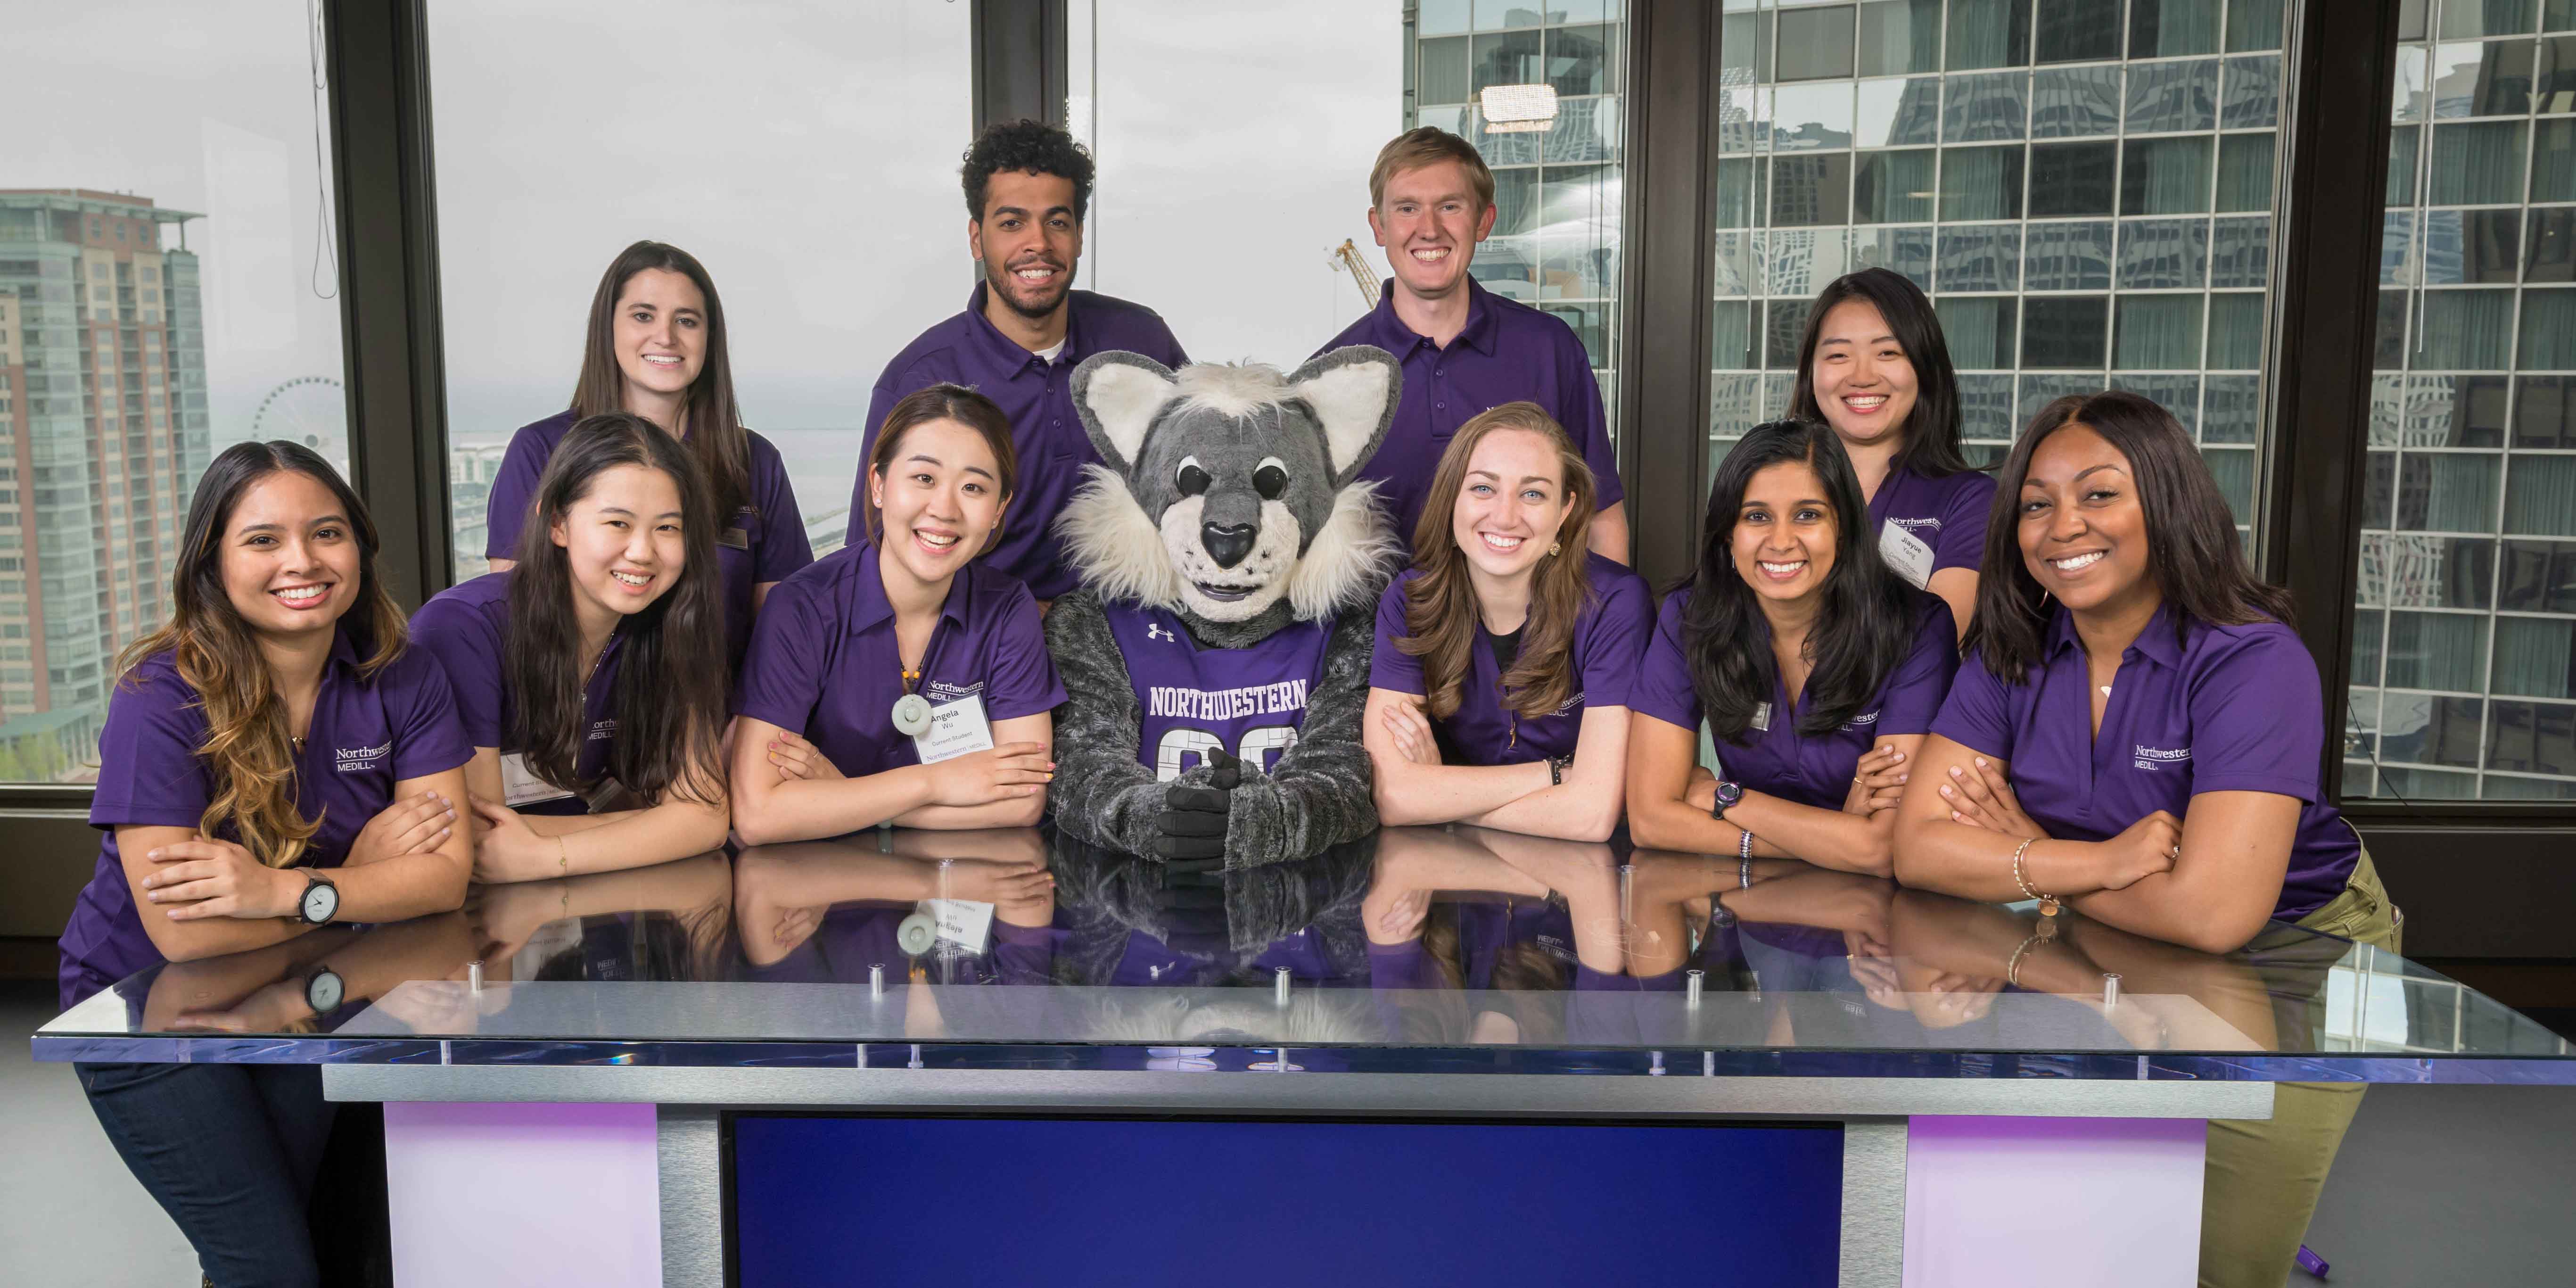 Students Leadership Committee members posing with NU mascot Willie Wildcat